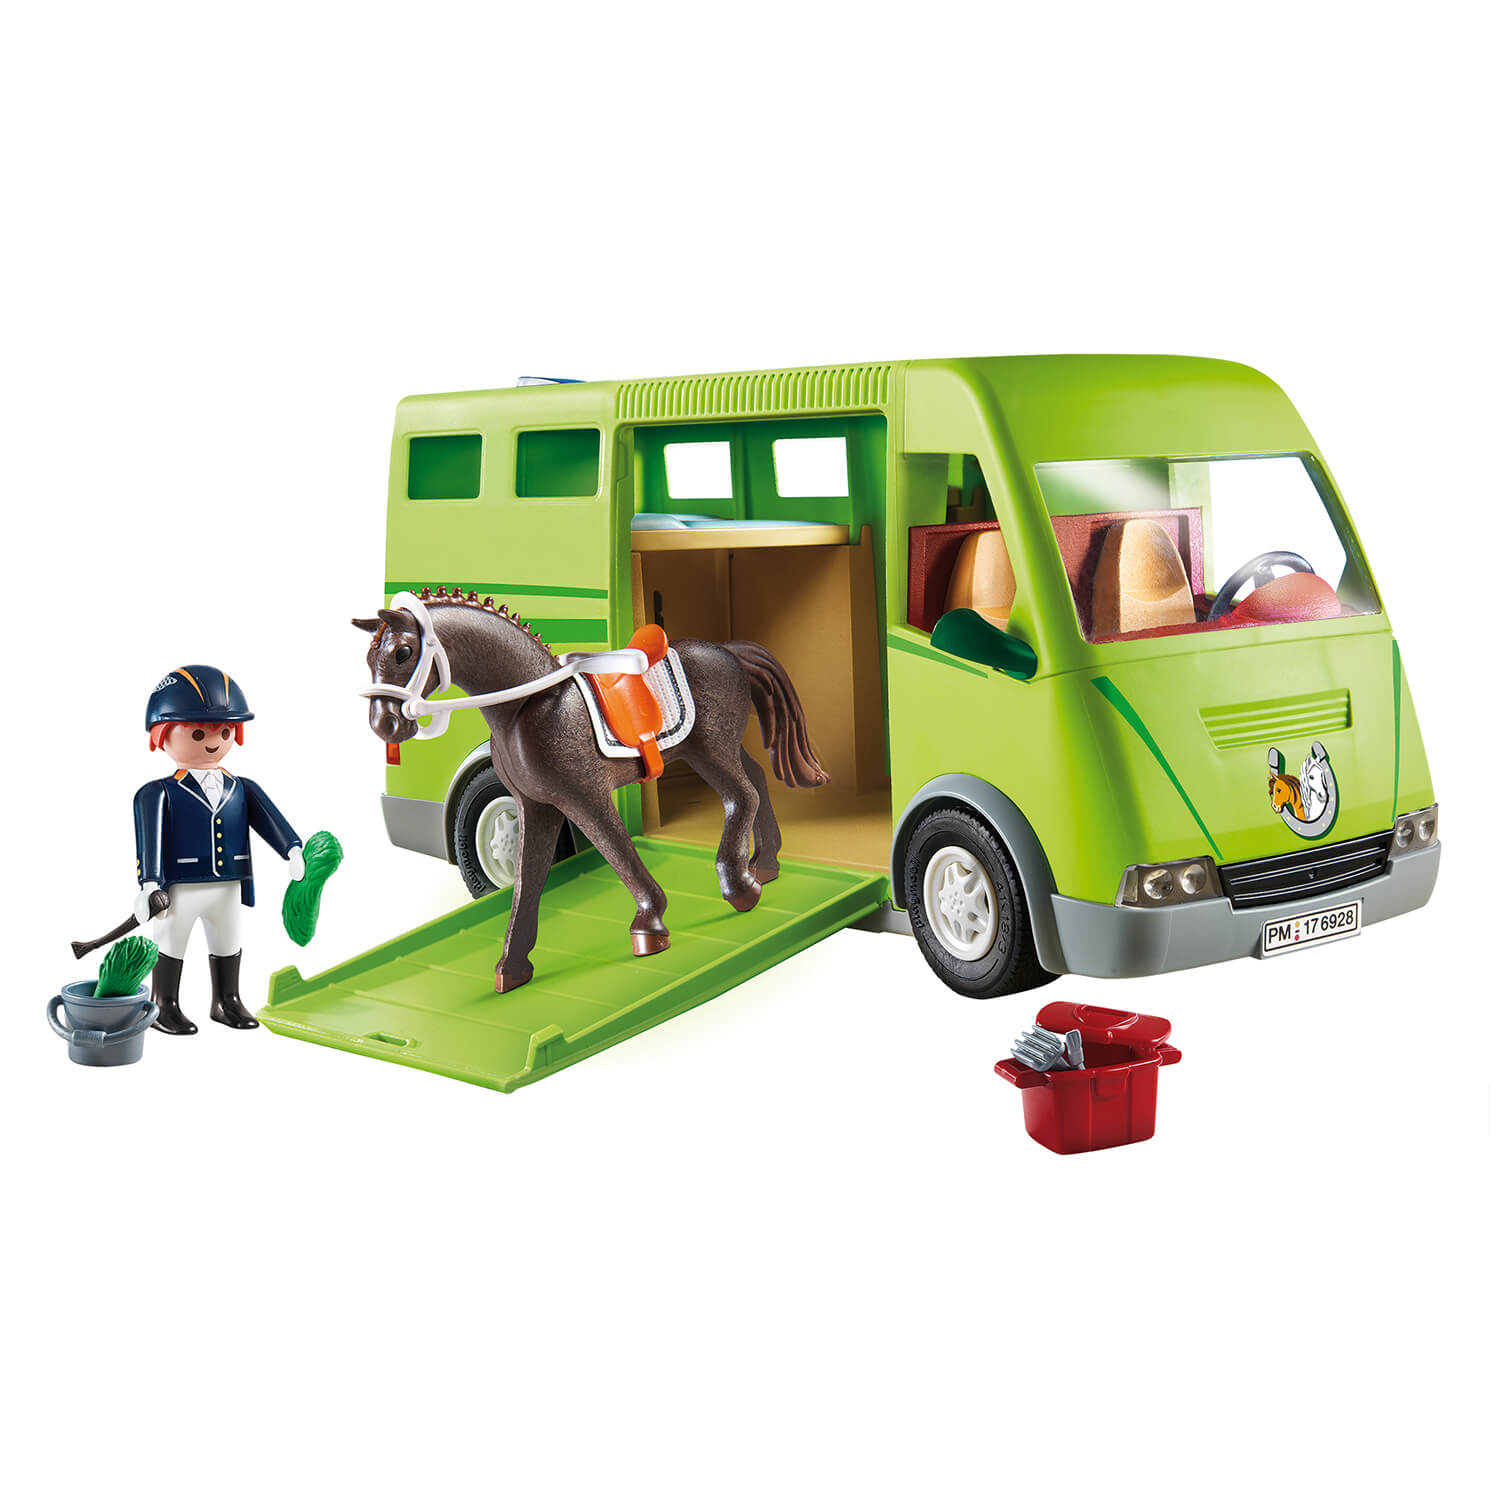 Playmobil 6928 (van pour chevaux)